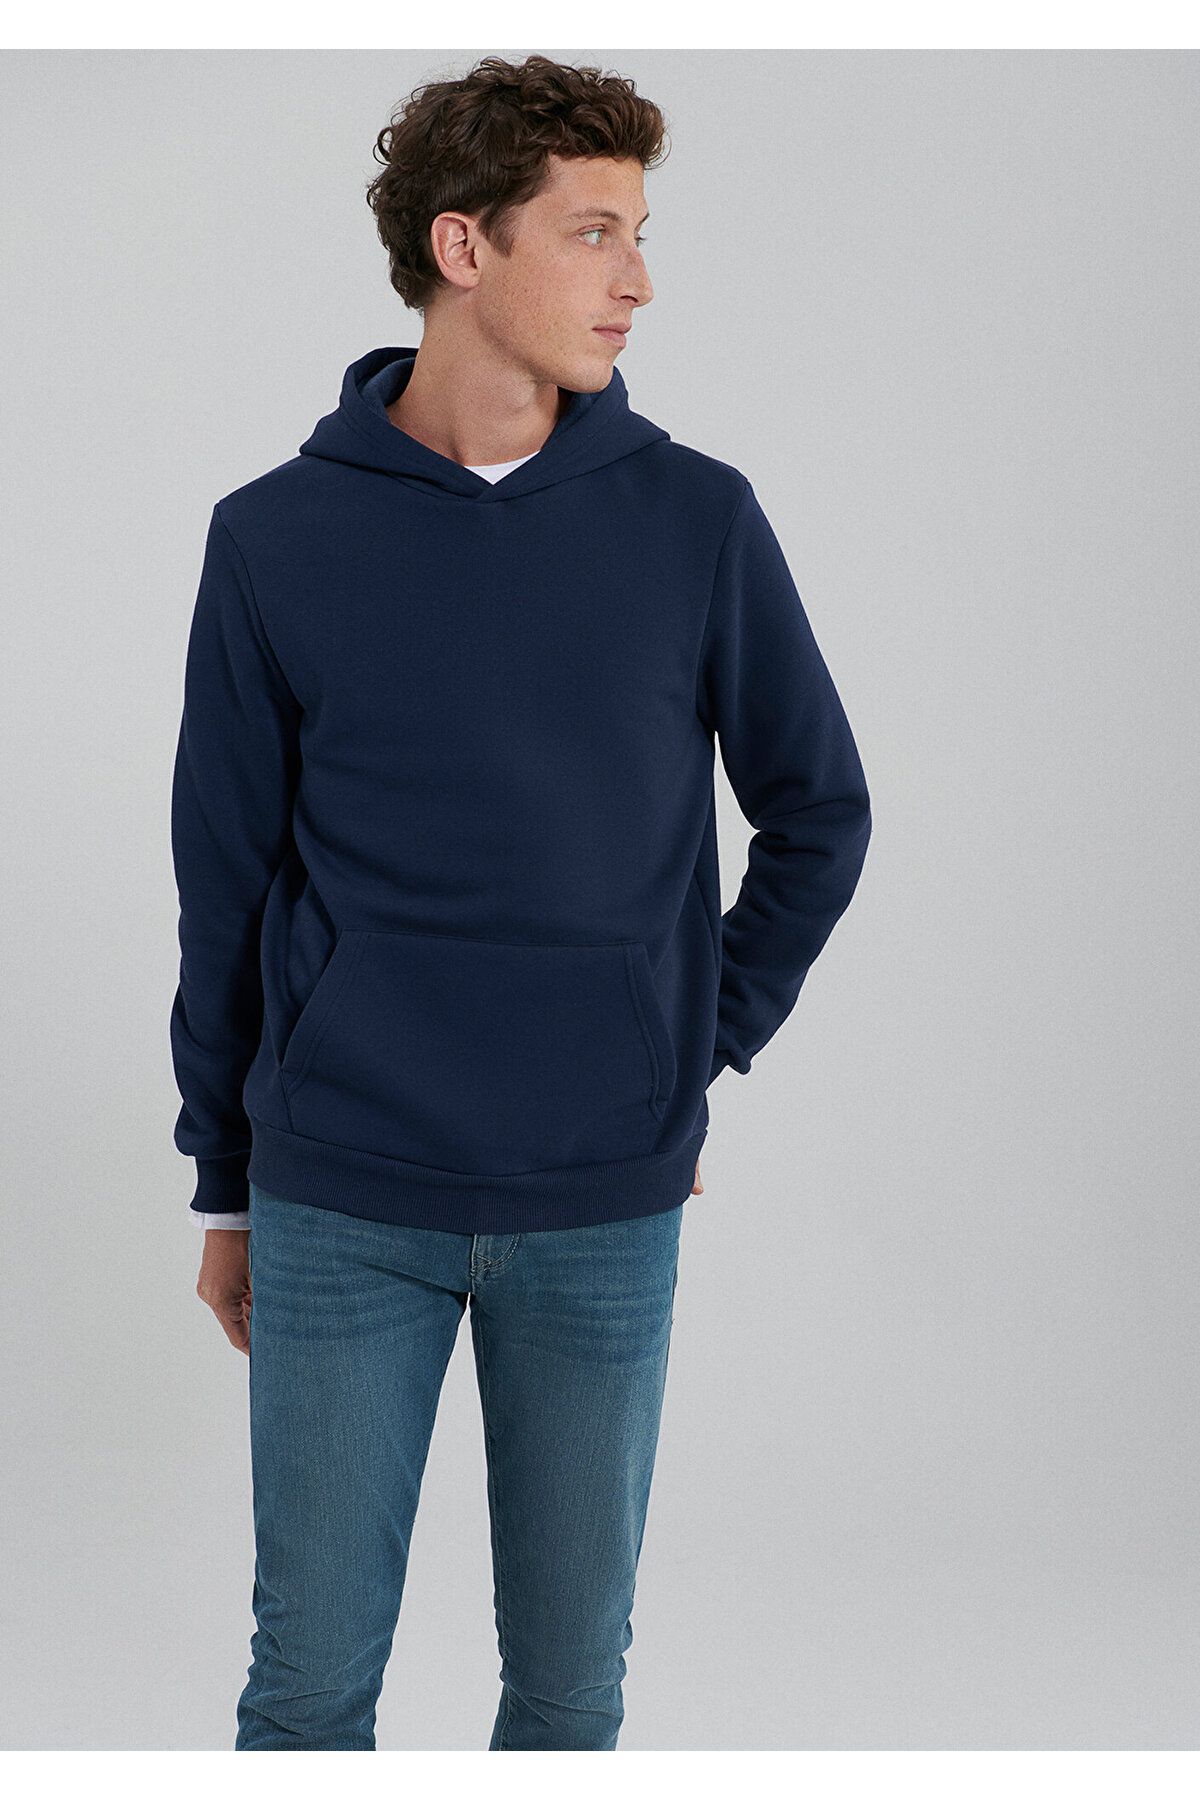 Mavi Kapüşonlu Lacivert Basic Sweatshirt 0610937-82318